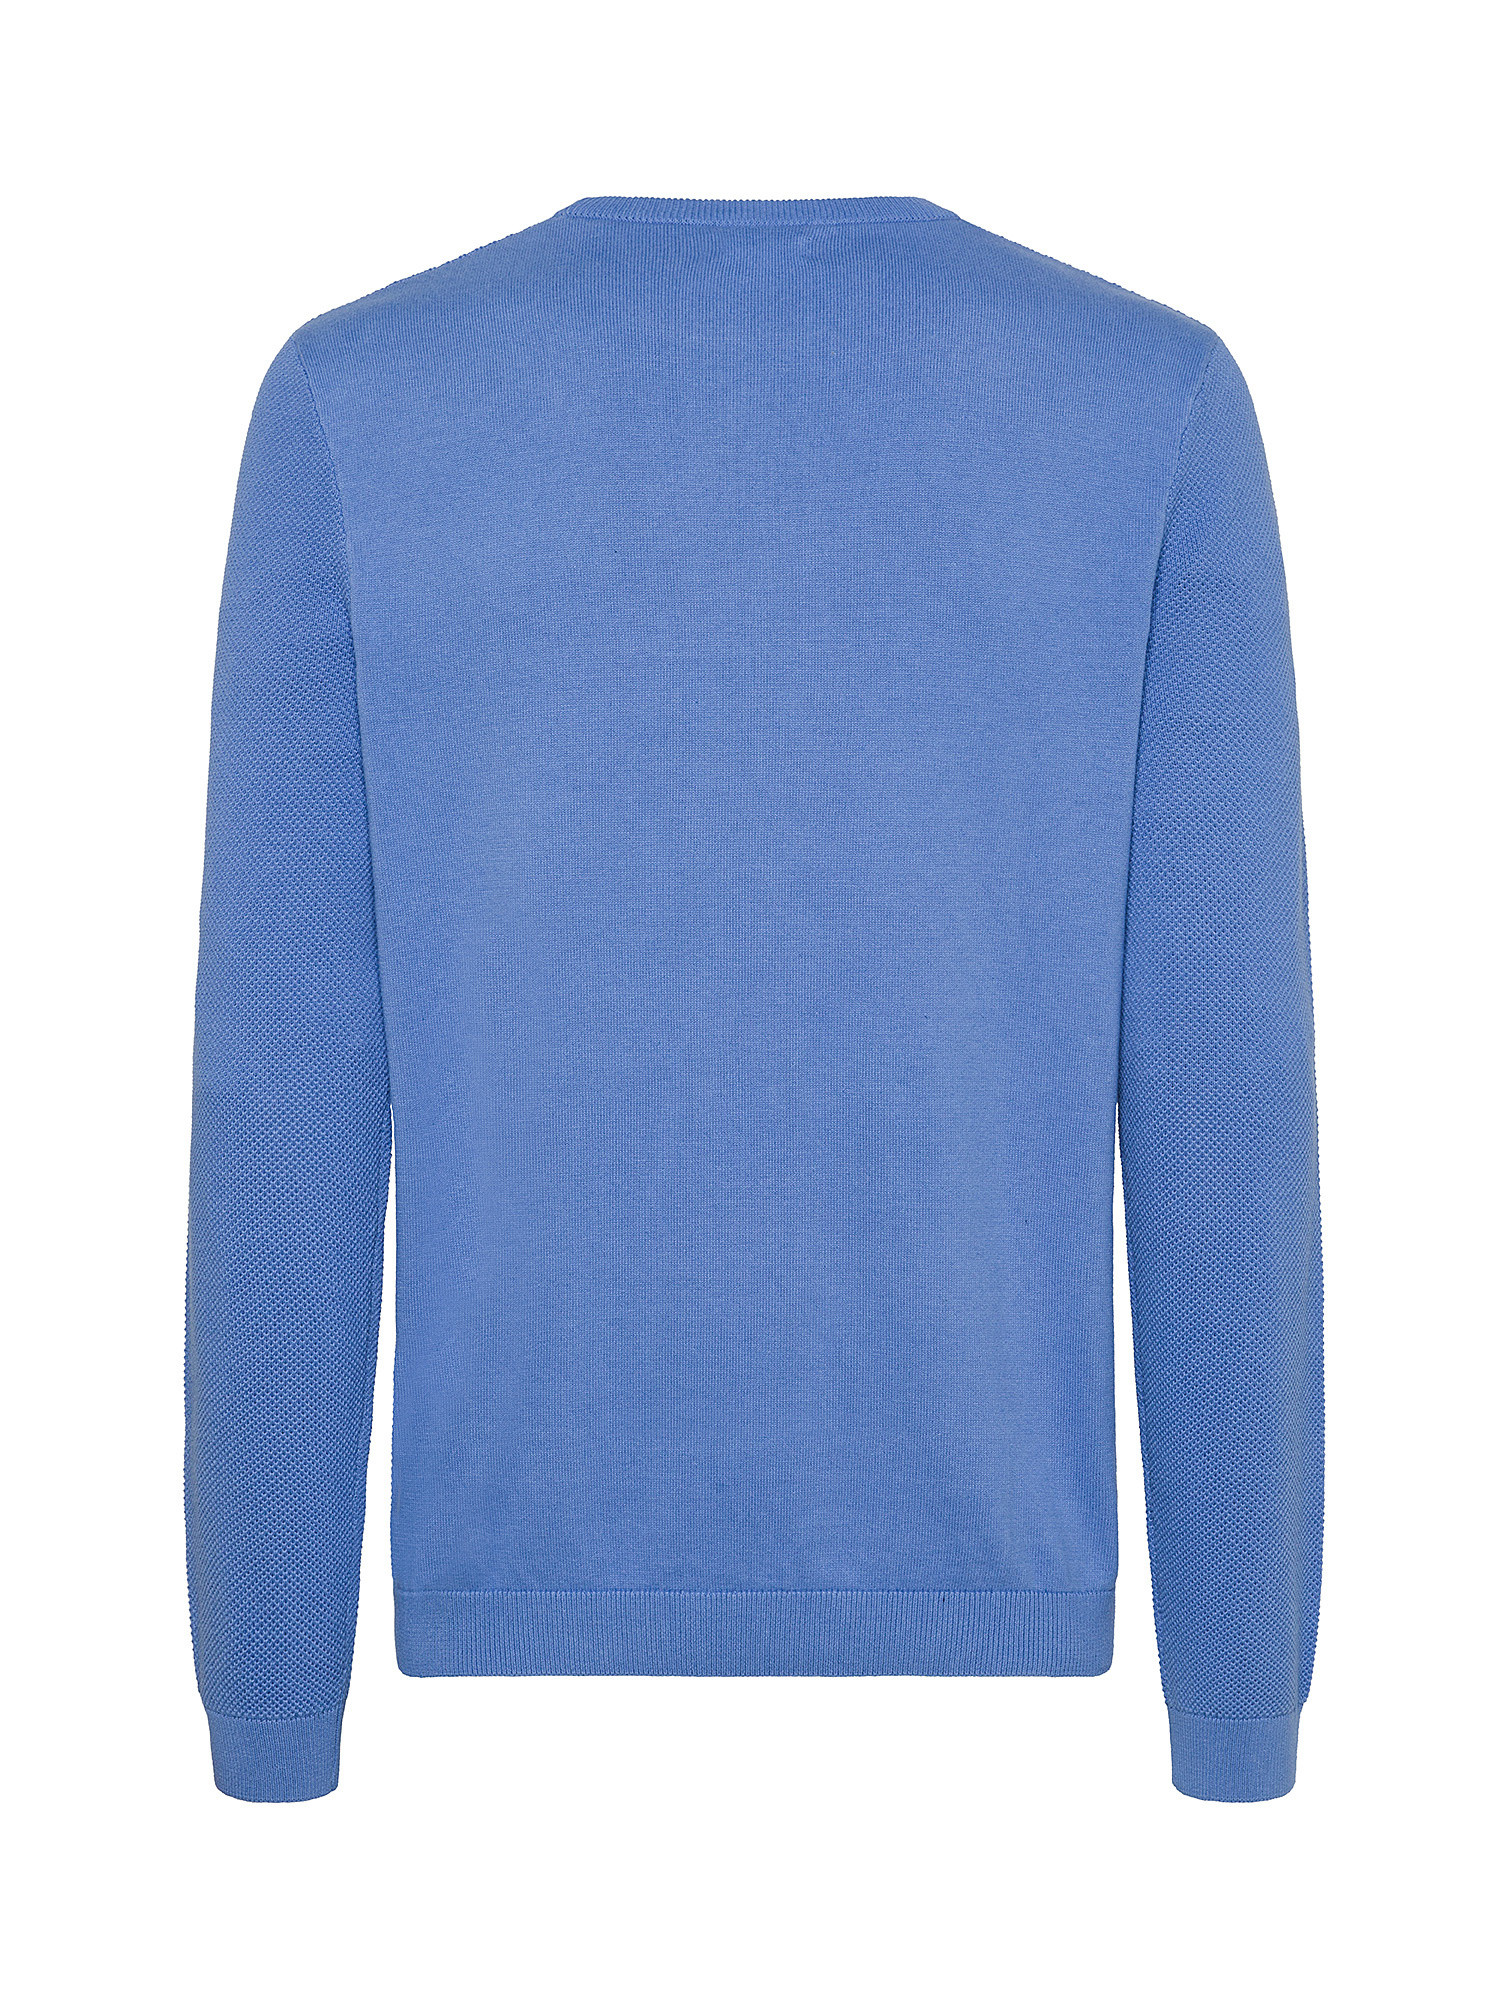 Luca D'Altieri - Crew neck sweater in pure cotton, Blue Dark, large image number 1